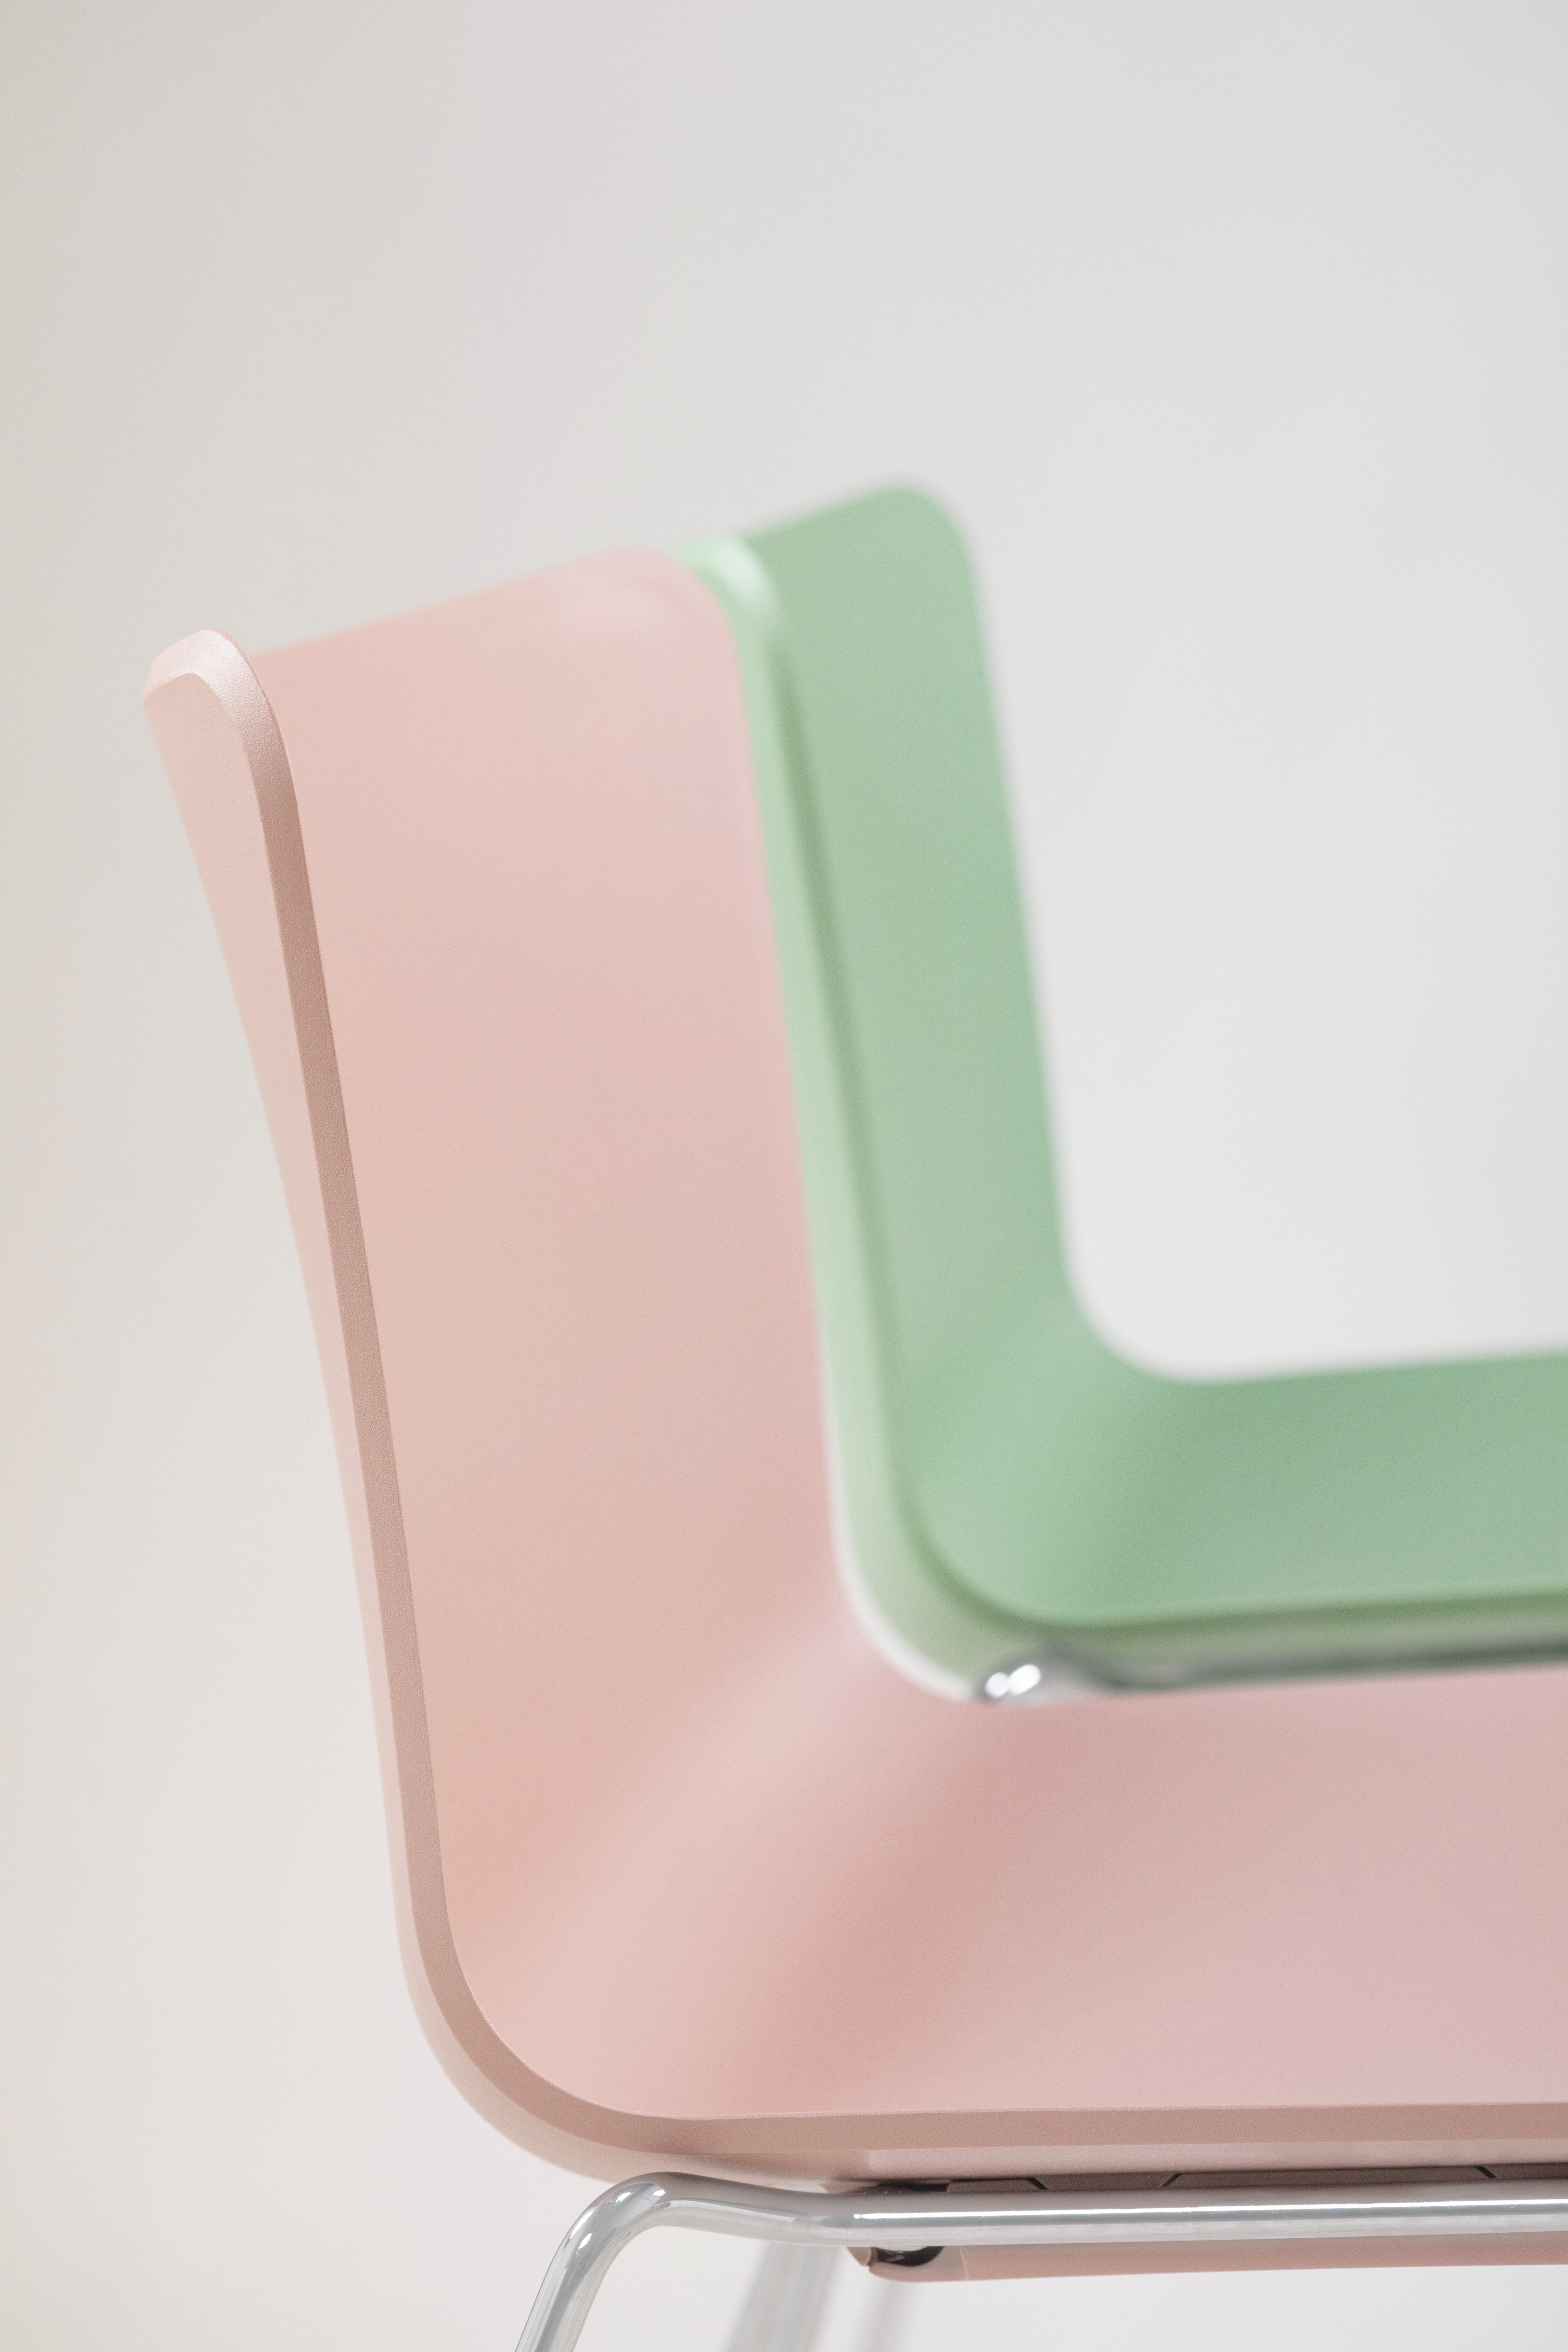 Detailfoto van roze en groene Sonja stoelen